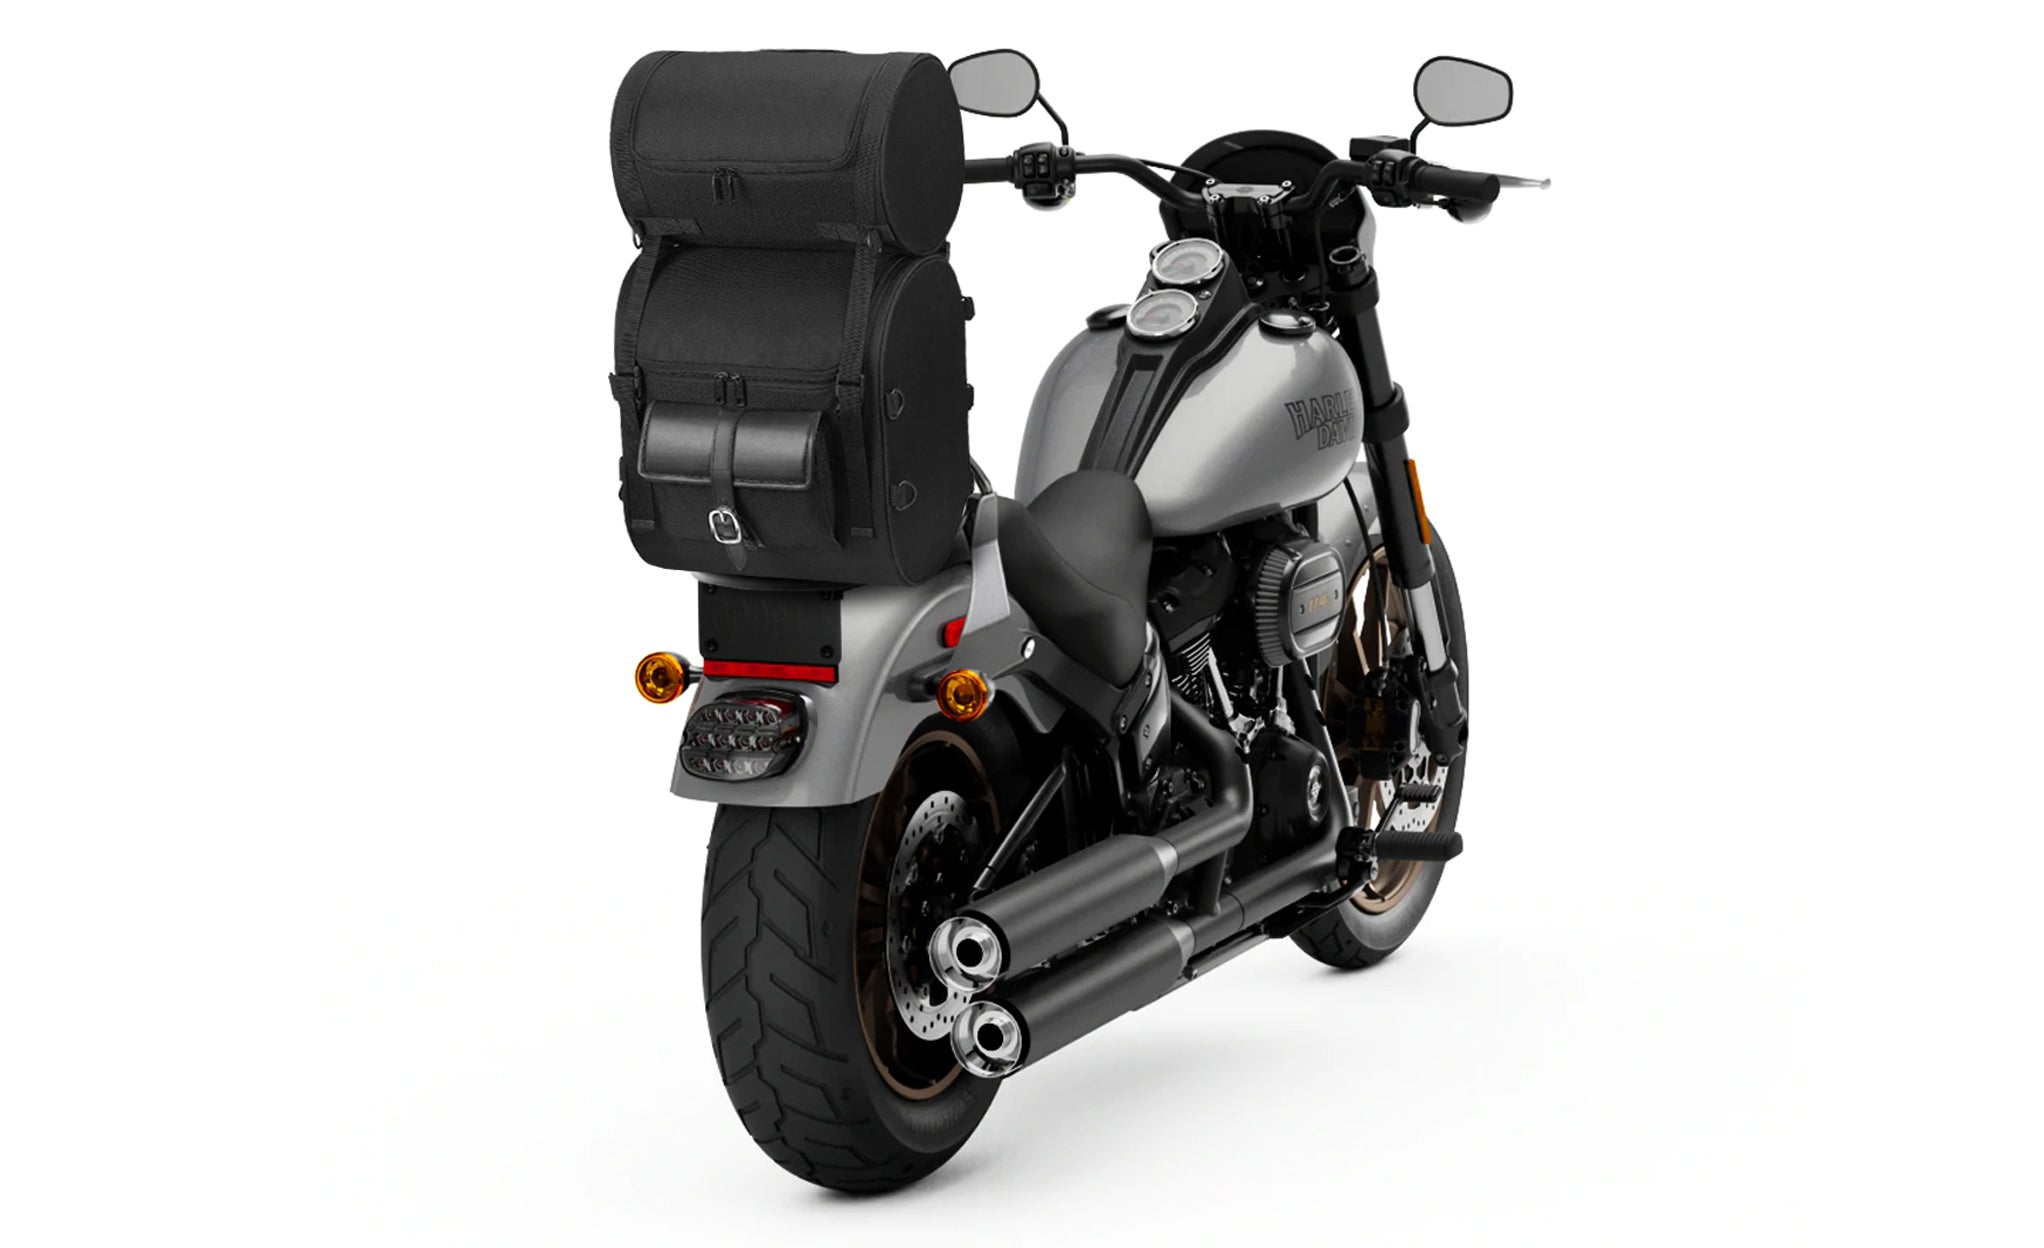 Viking Economy Line Medium Honda Motorcycle Sissy Bar Bag Bag on Bike View @expand